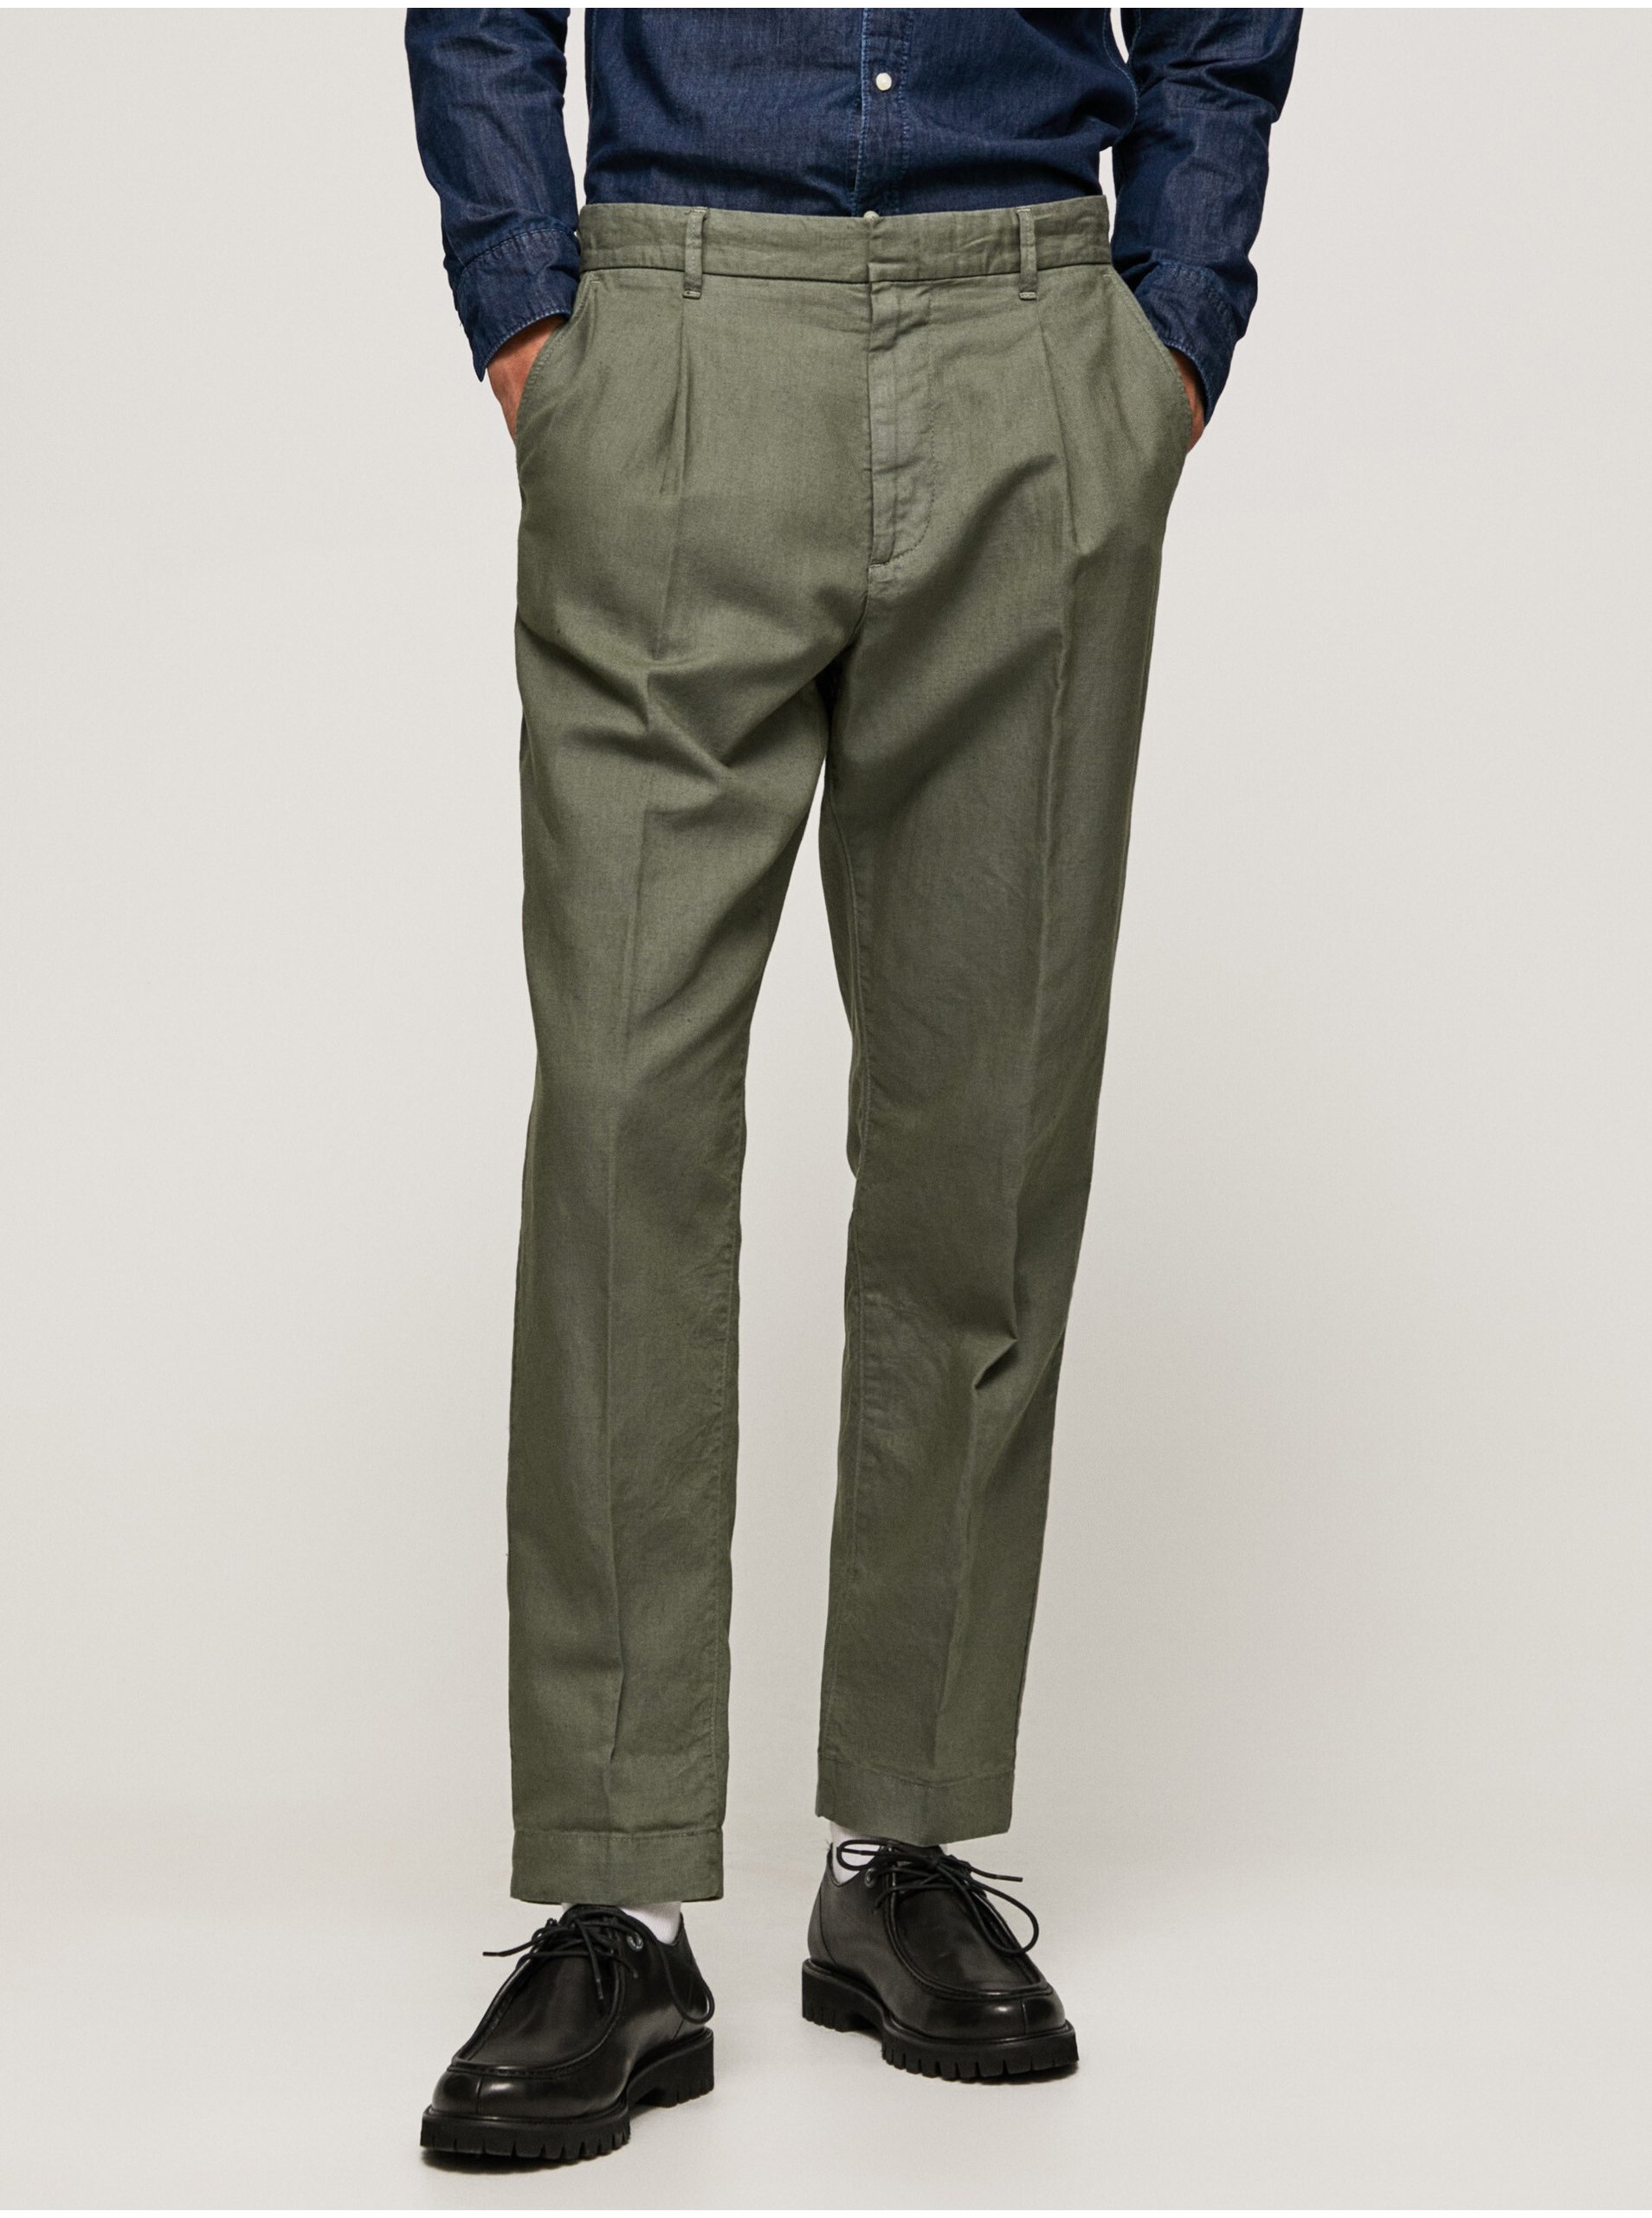 Lacno Formálne nohavice pre mužov Pepe Jeans - kaki